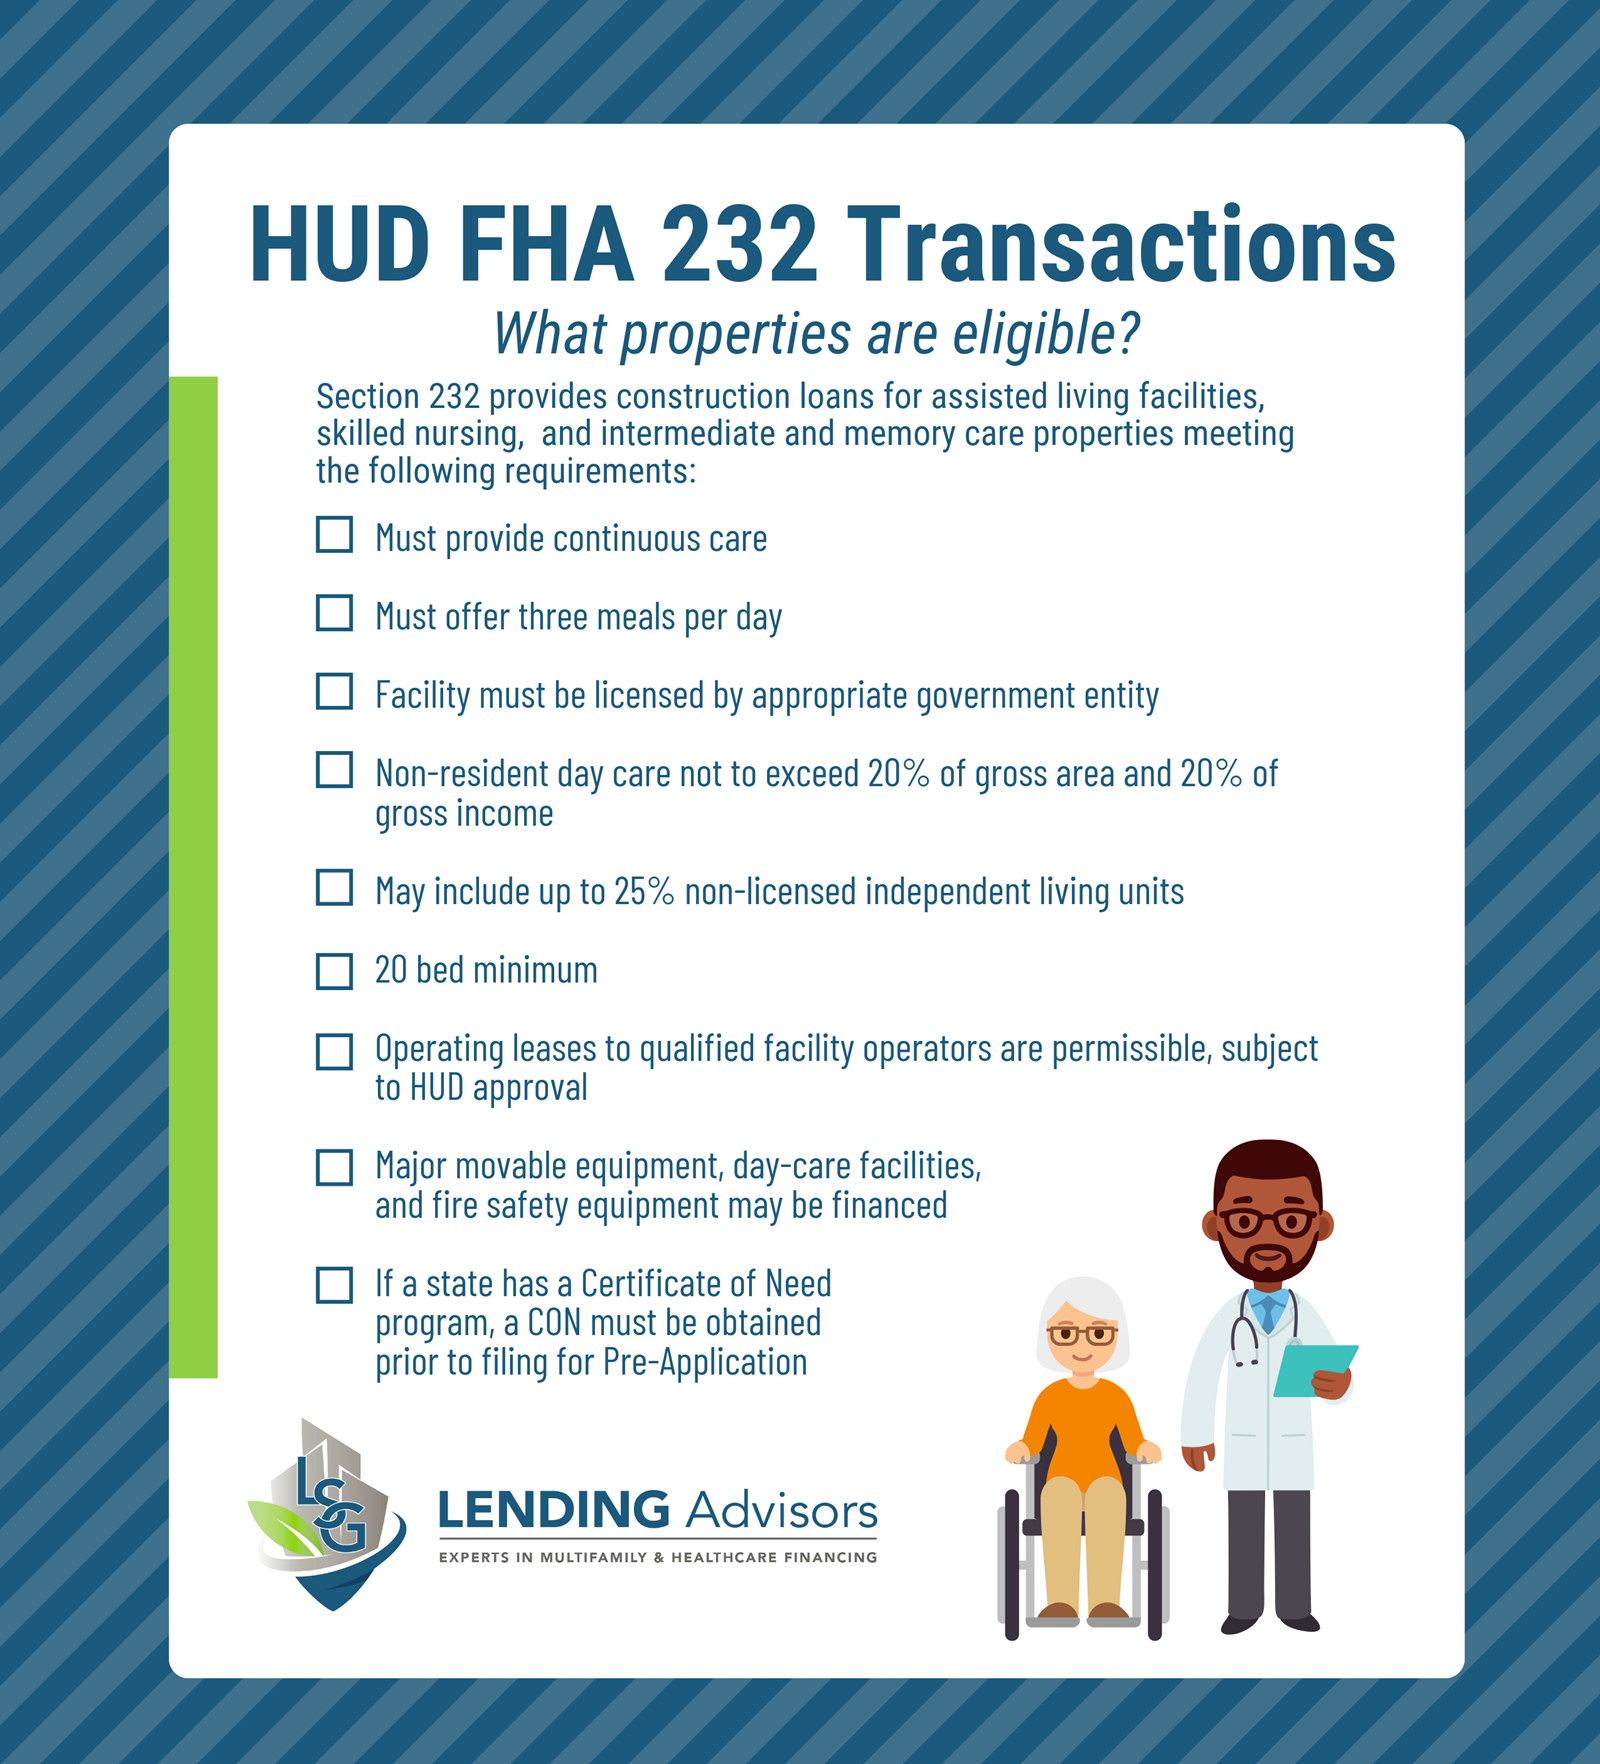 LSG FHA 232 Eligible Properties Infographic